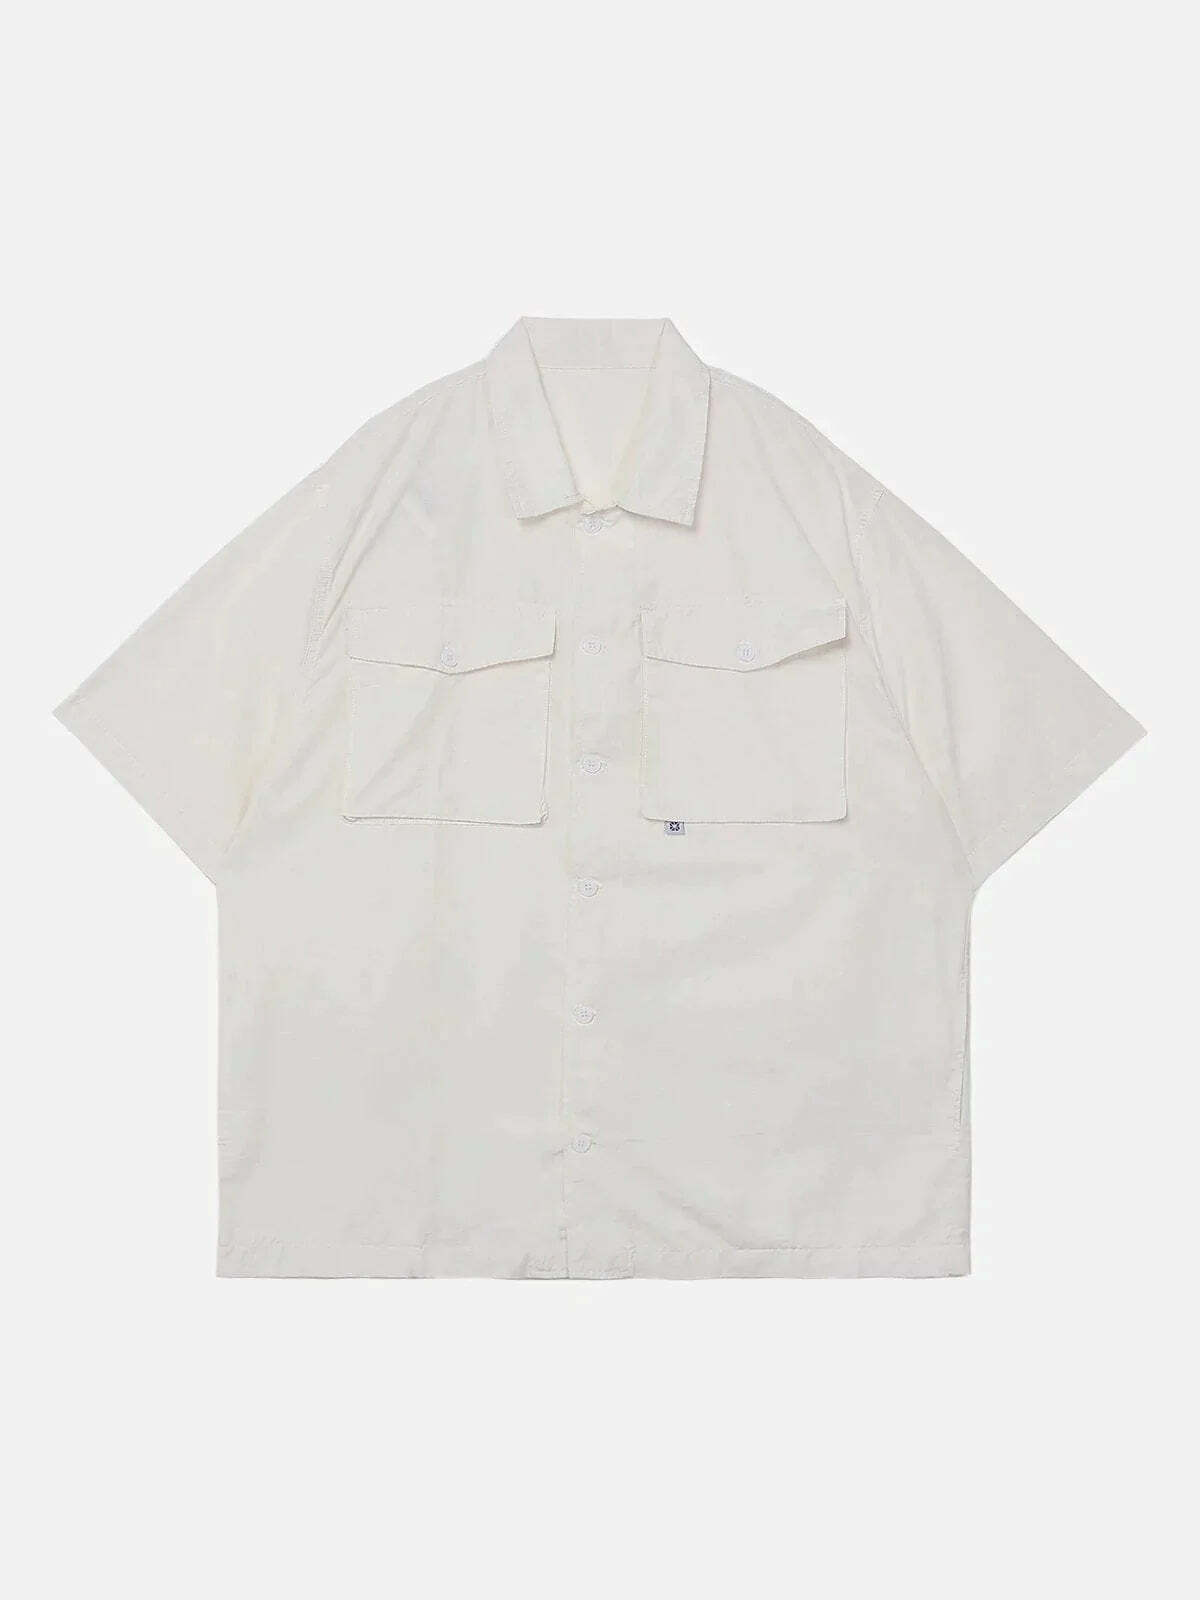 solid short sleeve shirt minimalist urban style 3777